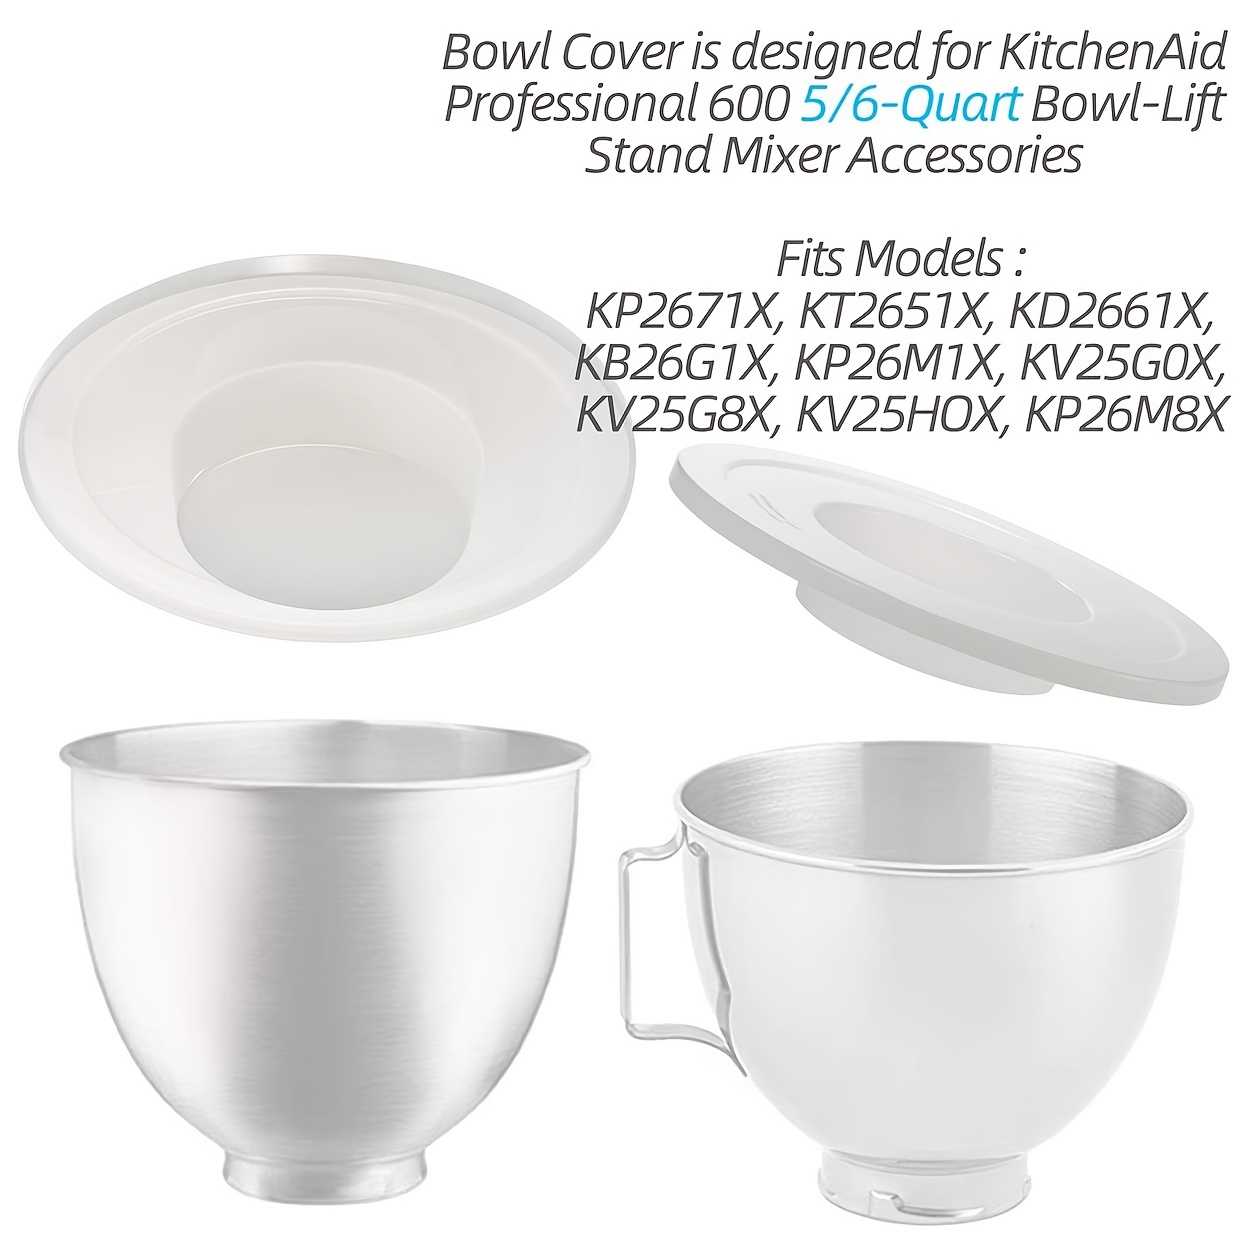 KitchenAid Professional 600 KP26M1X Bowl-Lift Stand Mixer - White